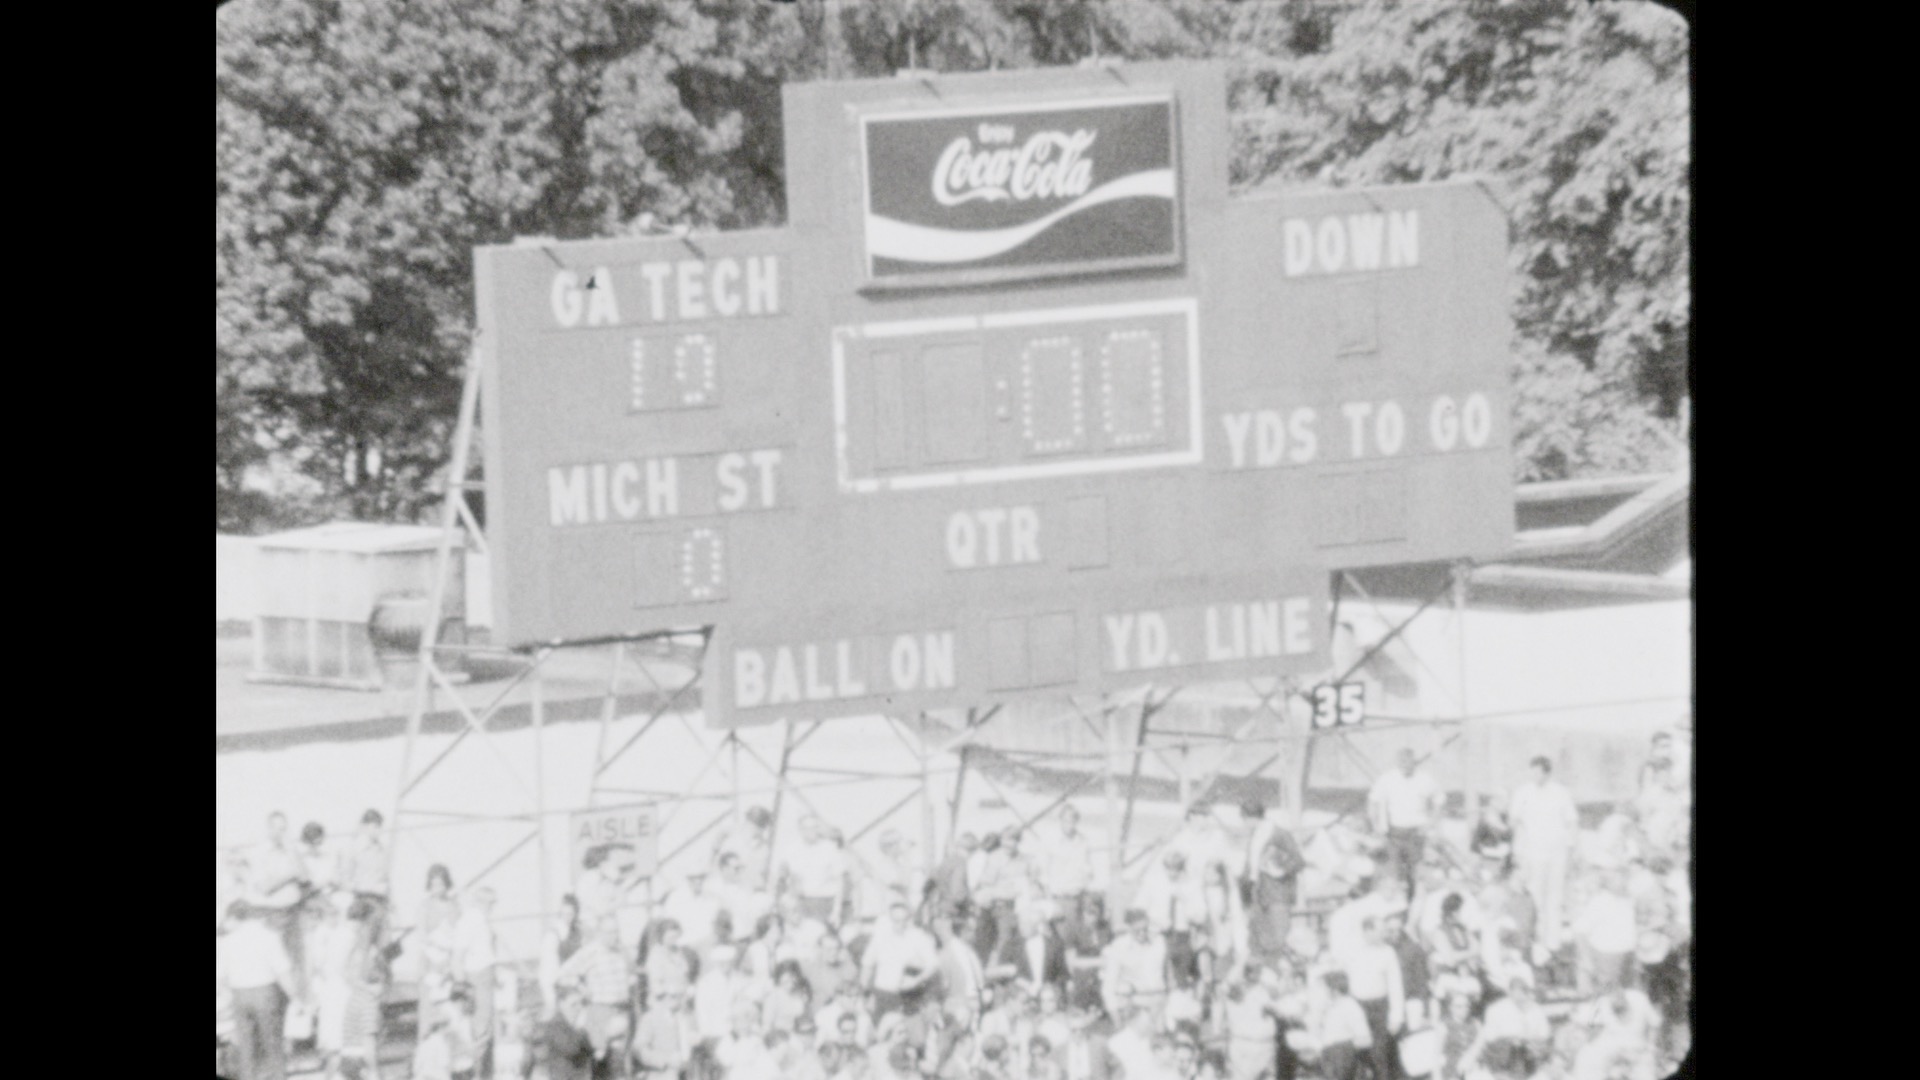 MSU Football vs. Georgia Tech, 1971